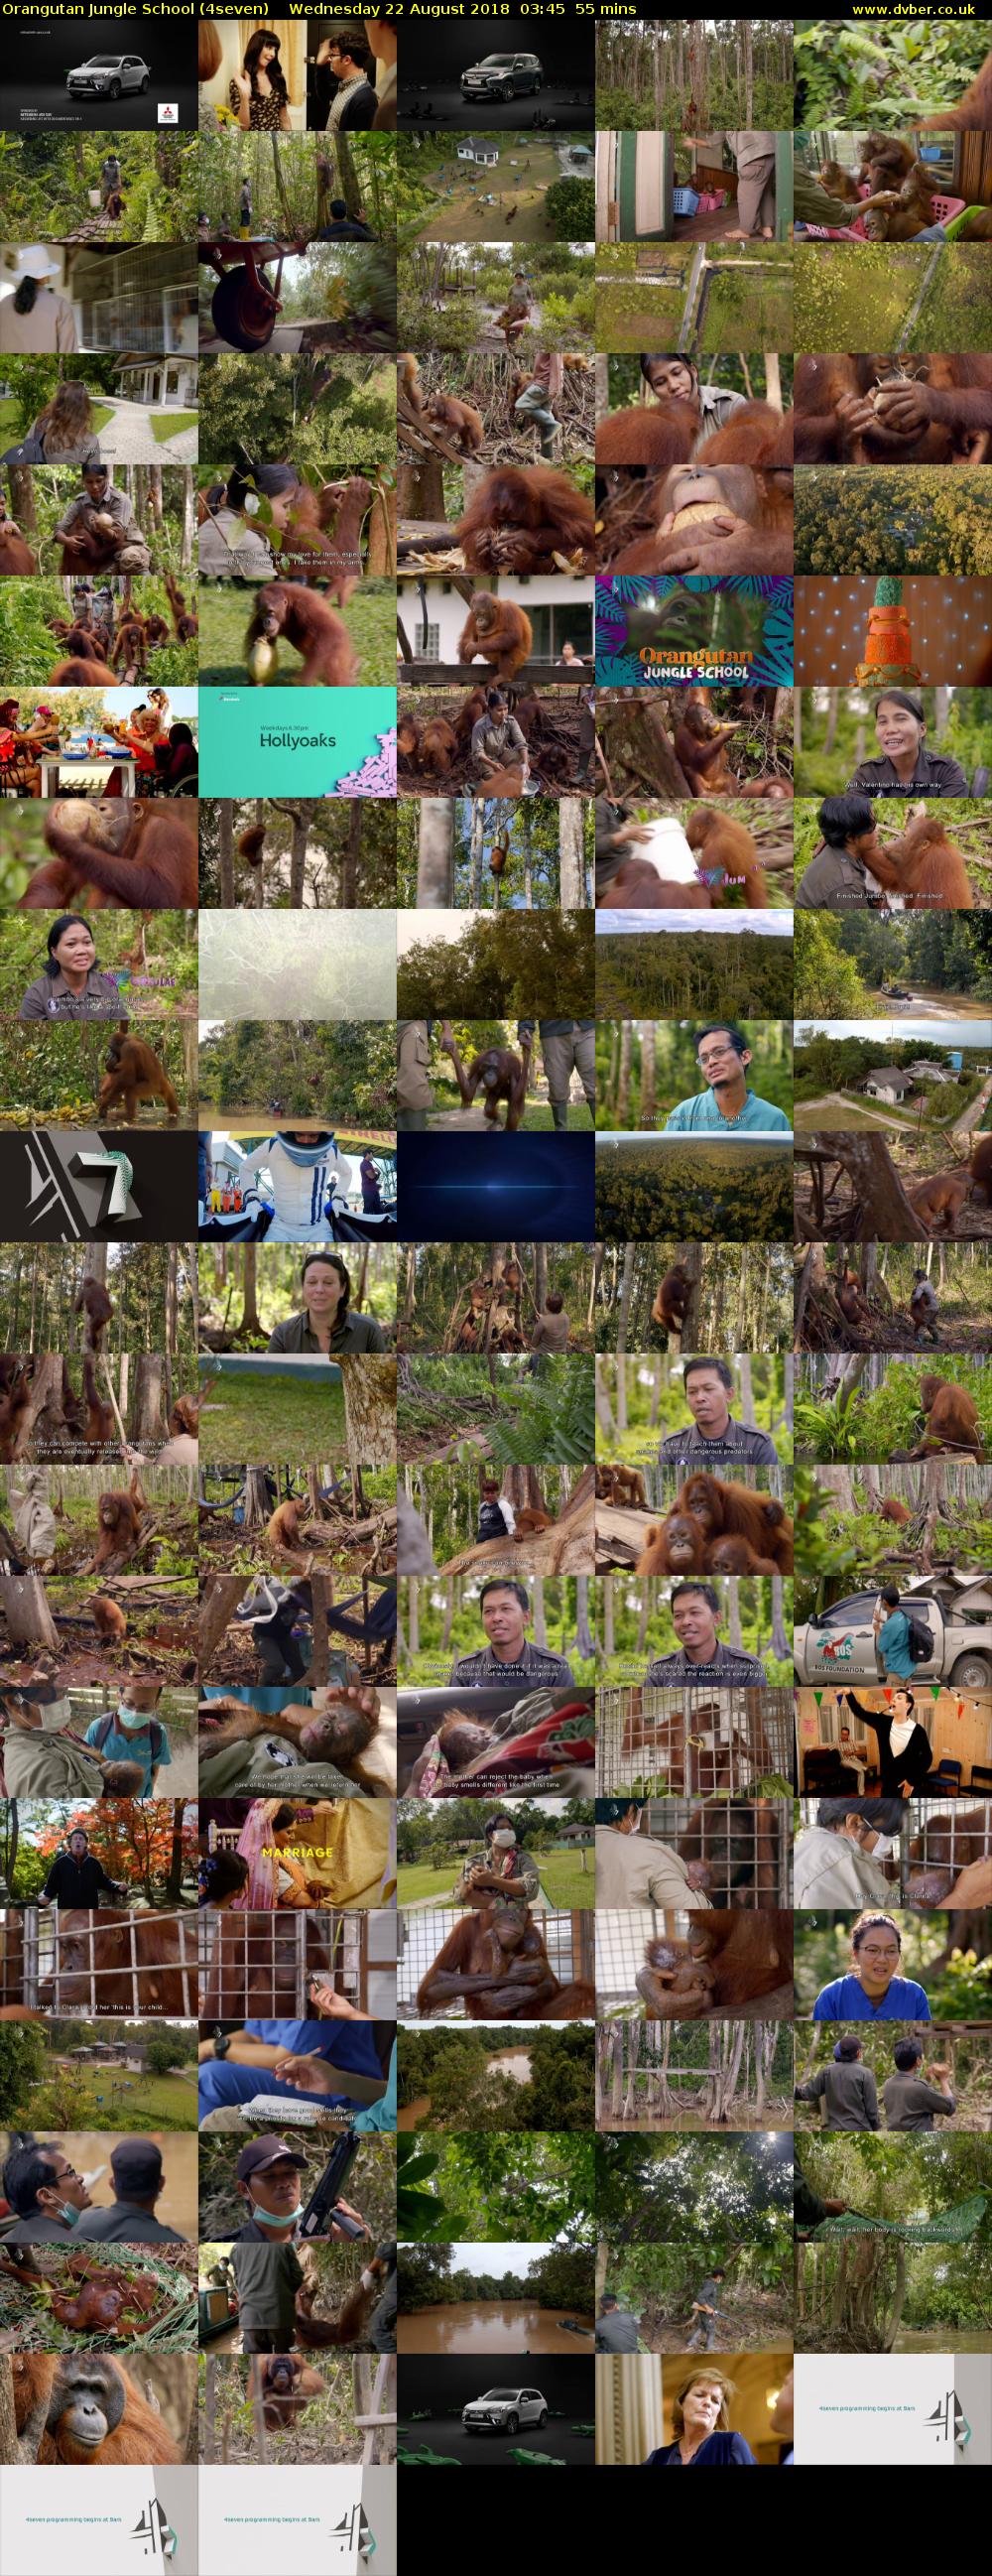 Orangutan Jungle School (4seven) Wednesday 22 August 2018 03:45 - 04:40